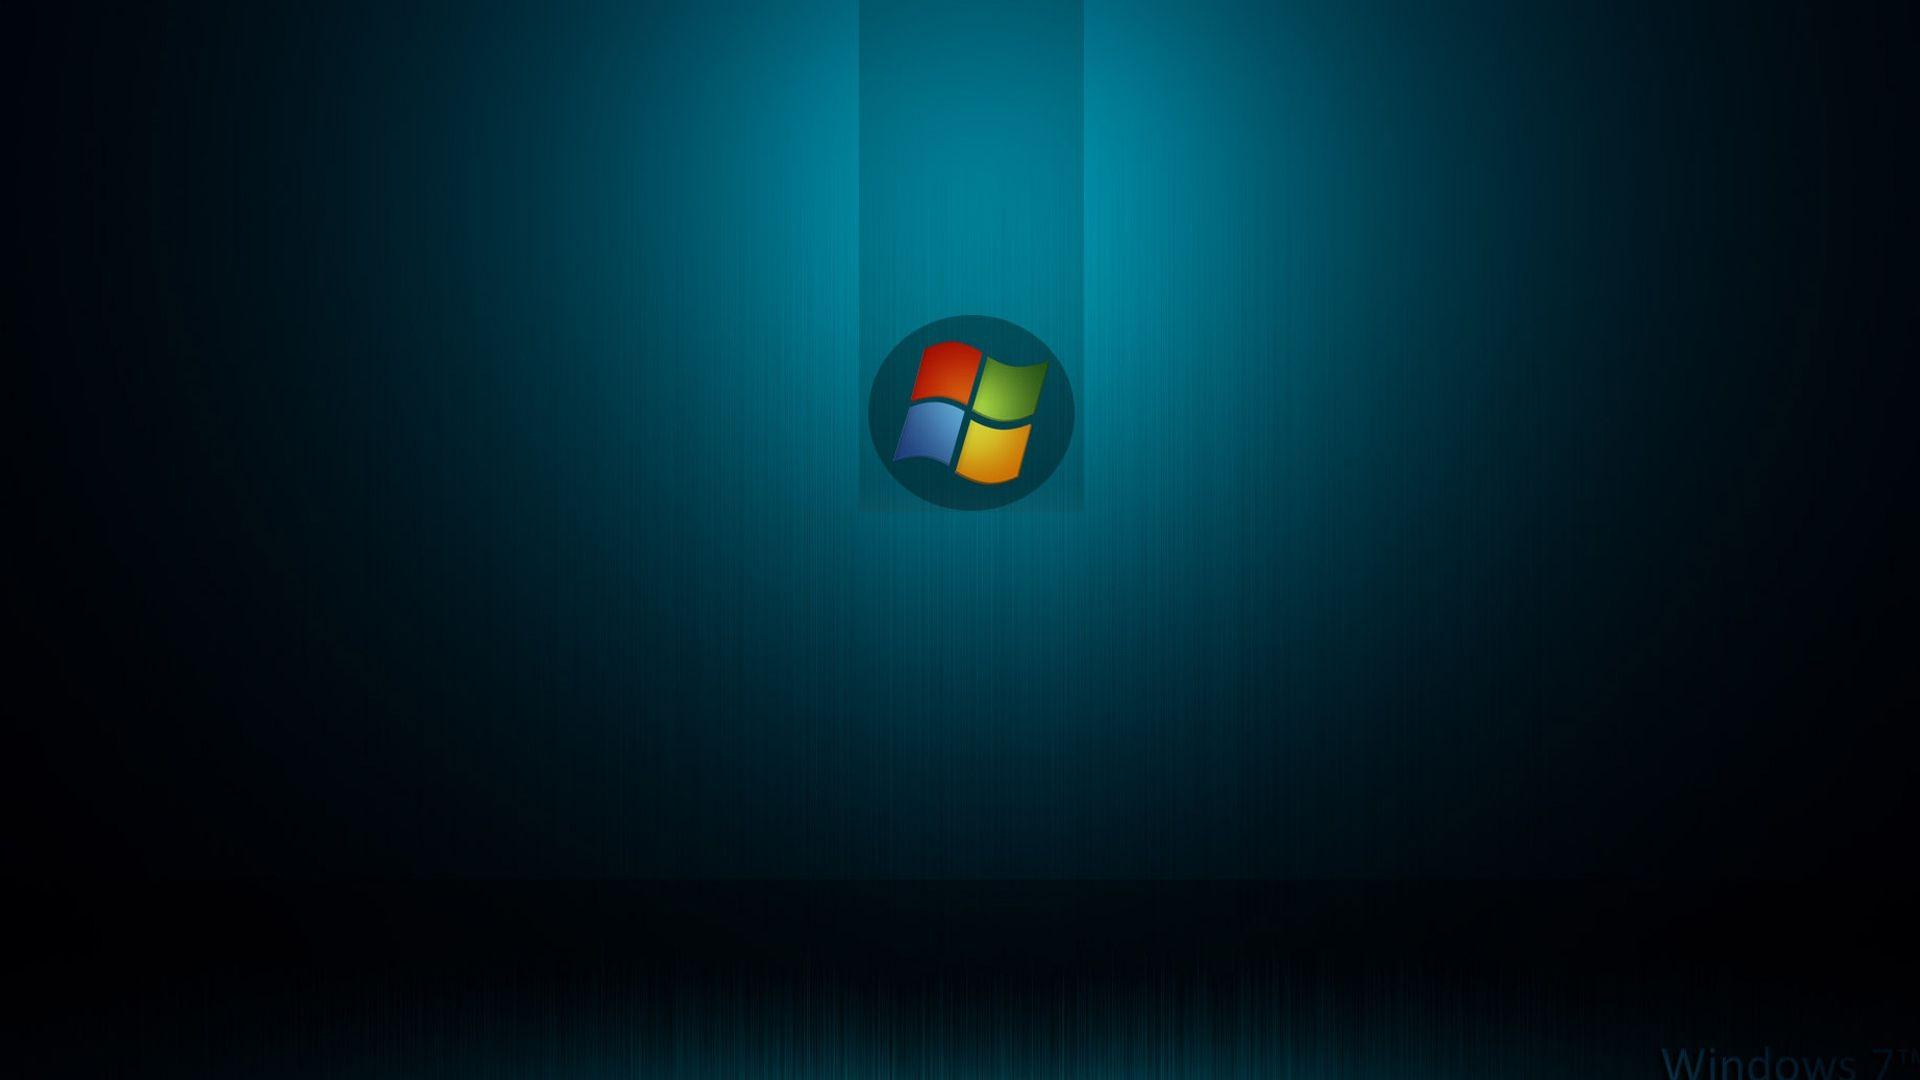 Windows Desktop Wallpaper and Background